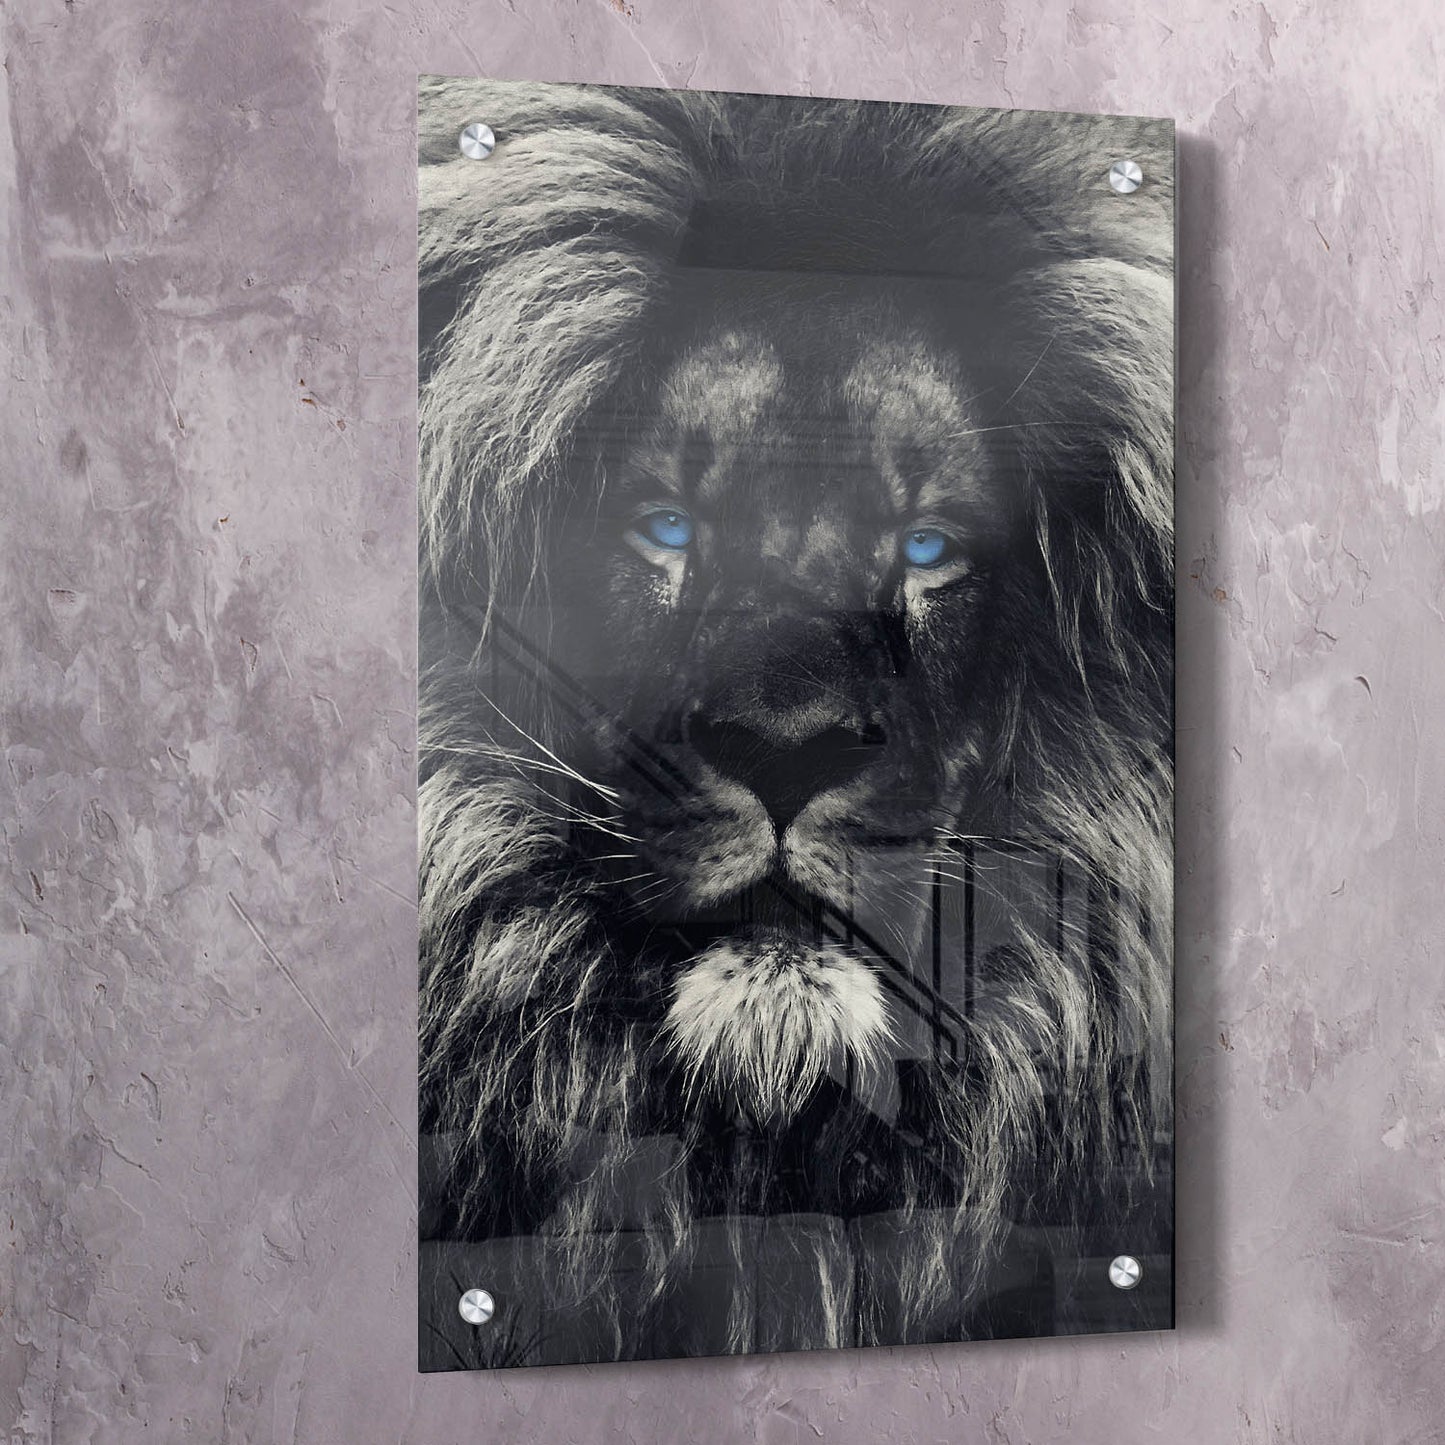 Dark Lion Blue Eyes Wall Art | Inspirational Wall Art Motivational Wall Art Quotes Office Art | ImpaktMaker Exclusive Canvas Art Portrait